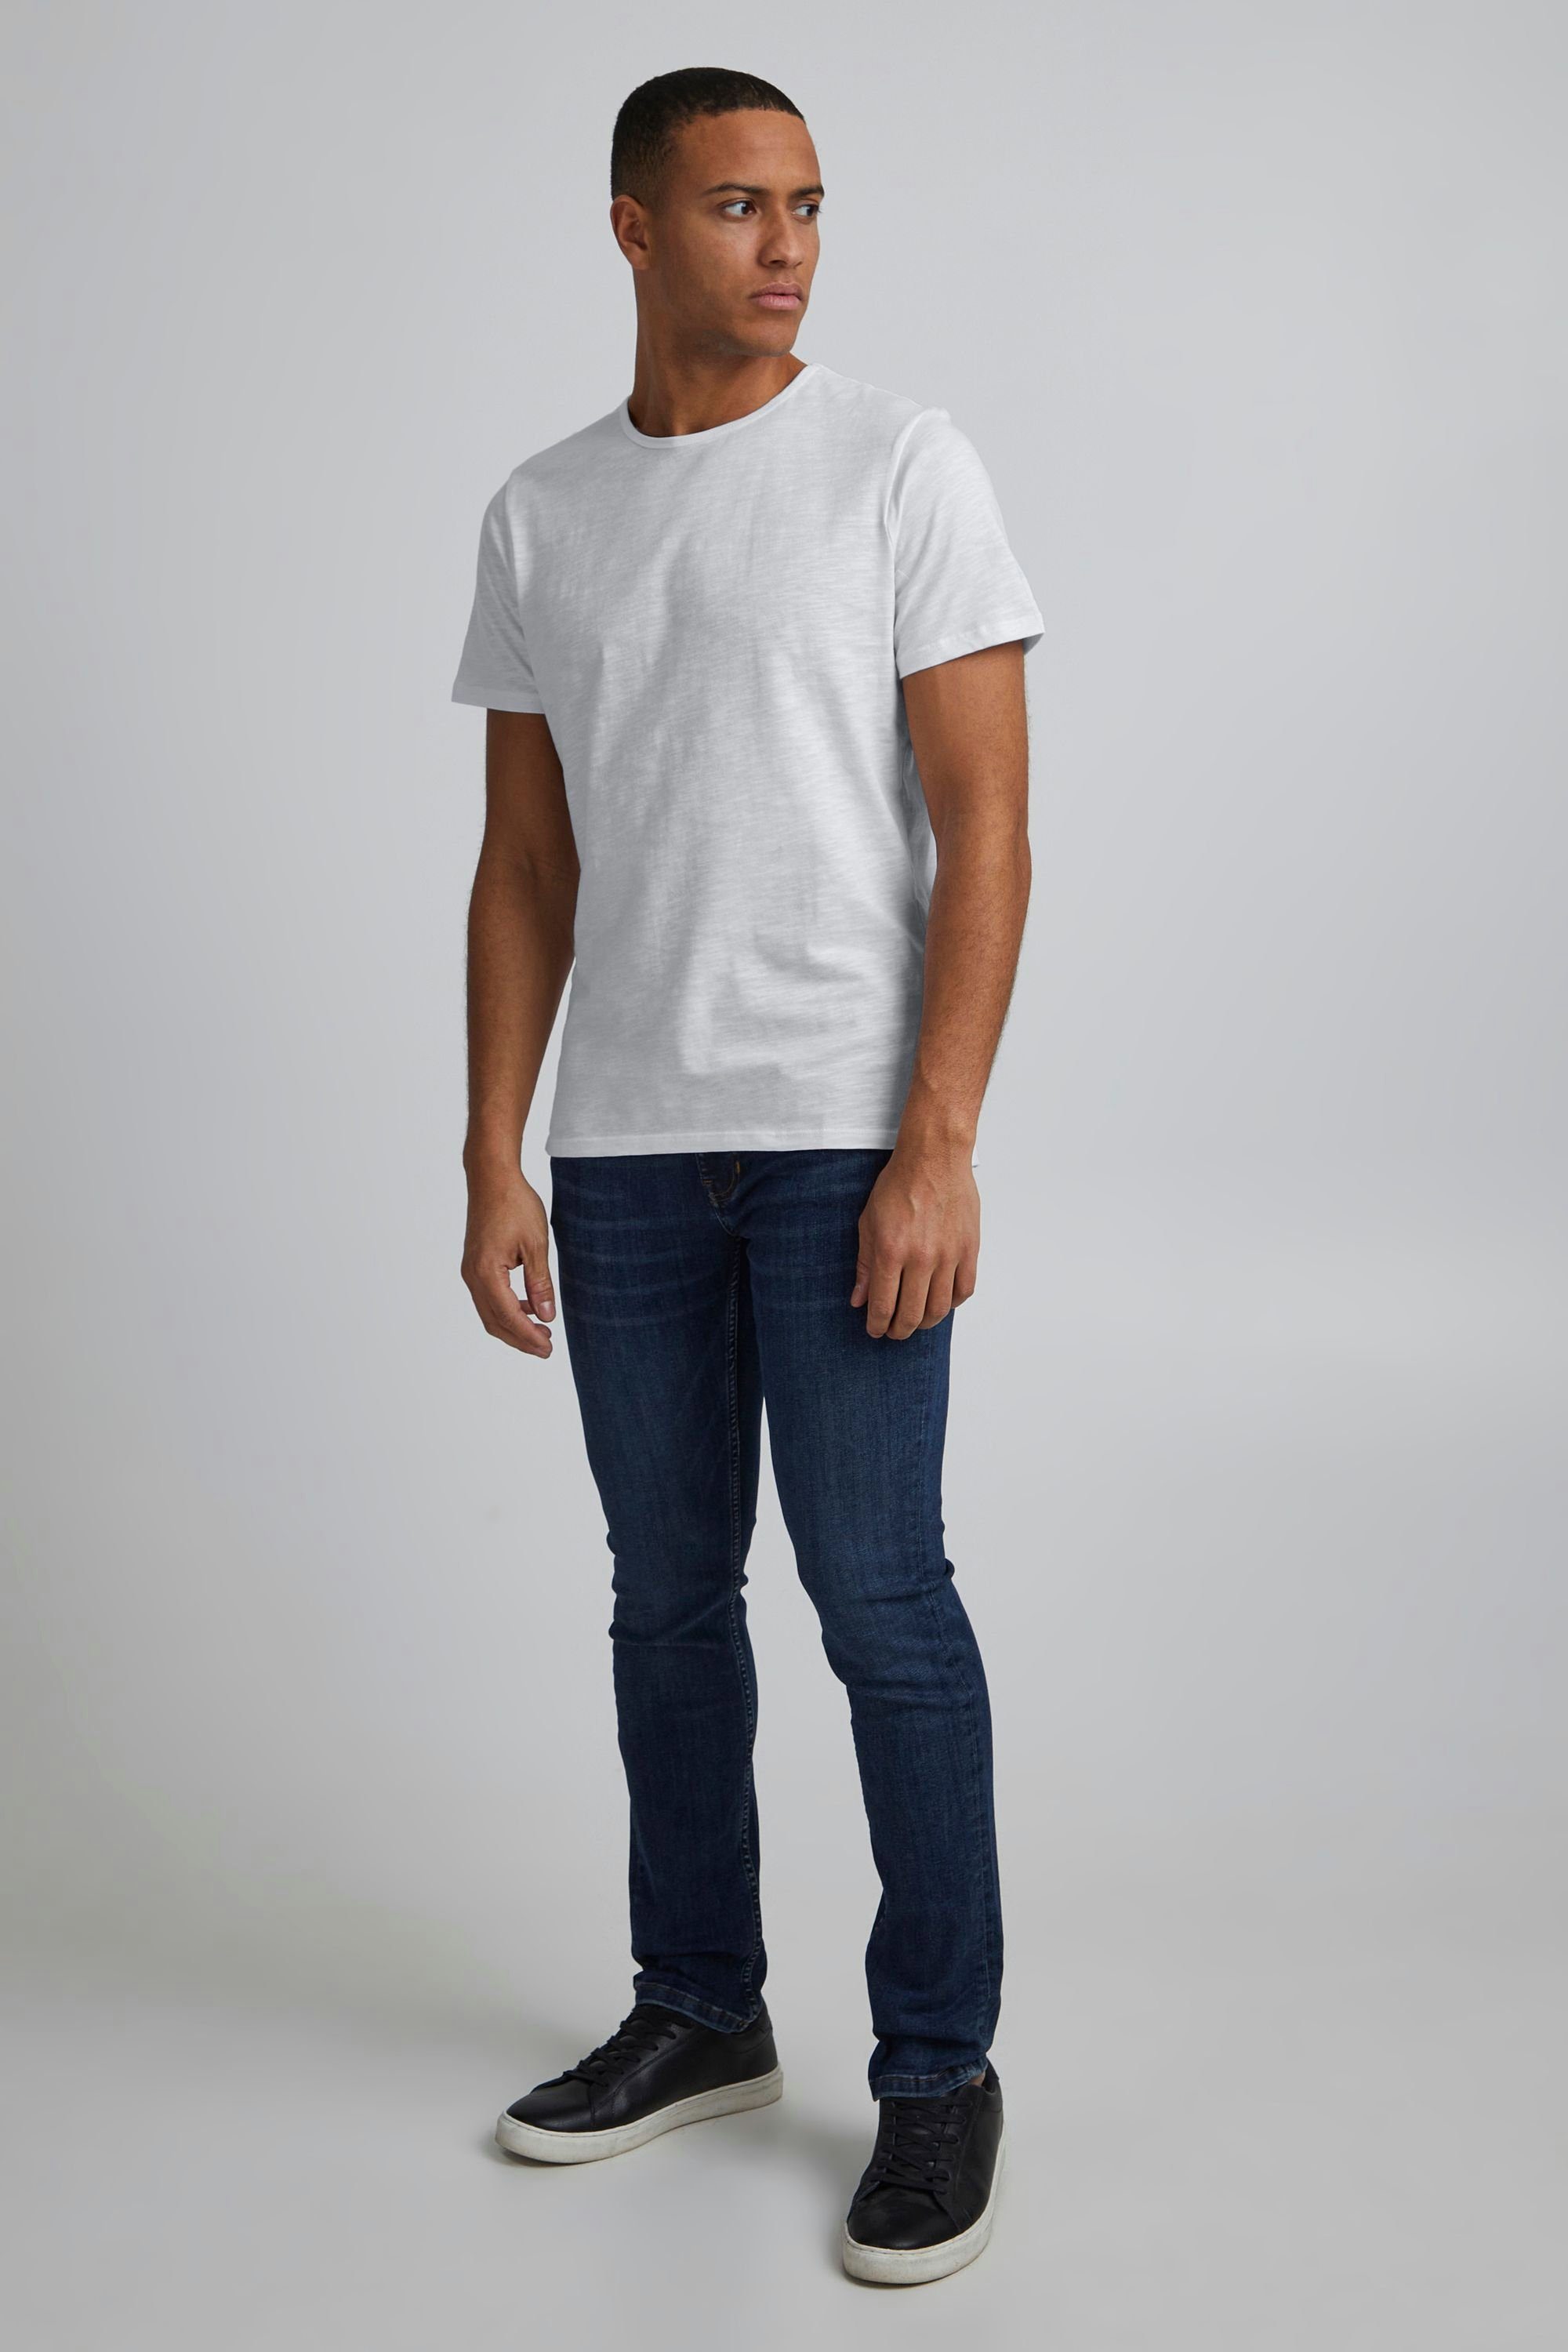 - 20502453 T-Shirt Shirt CFGrant (50104) Friday Rundhalsausschnitt Casual white mit Bright